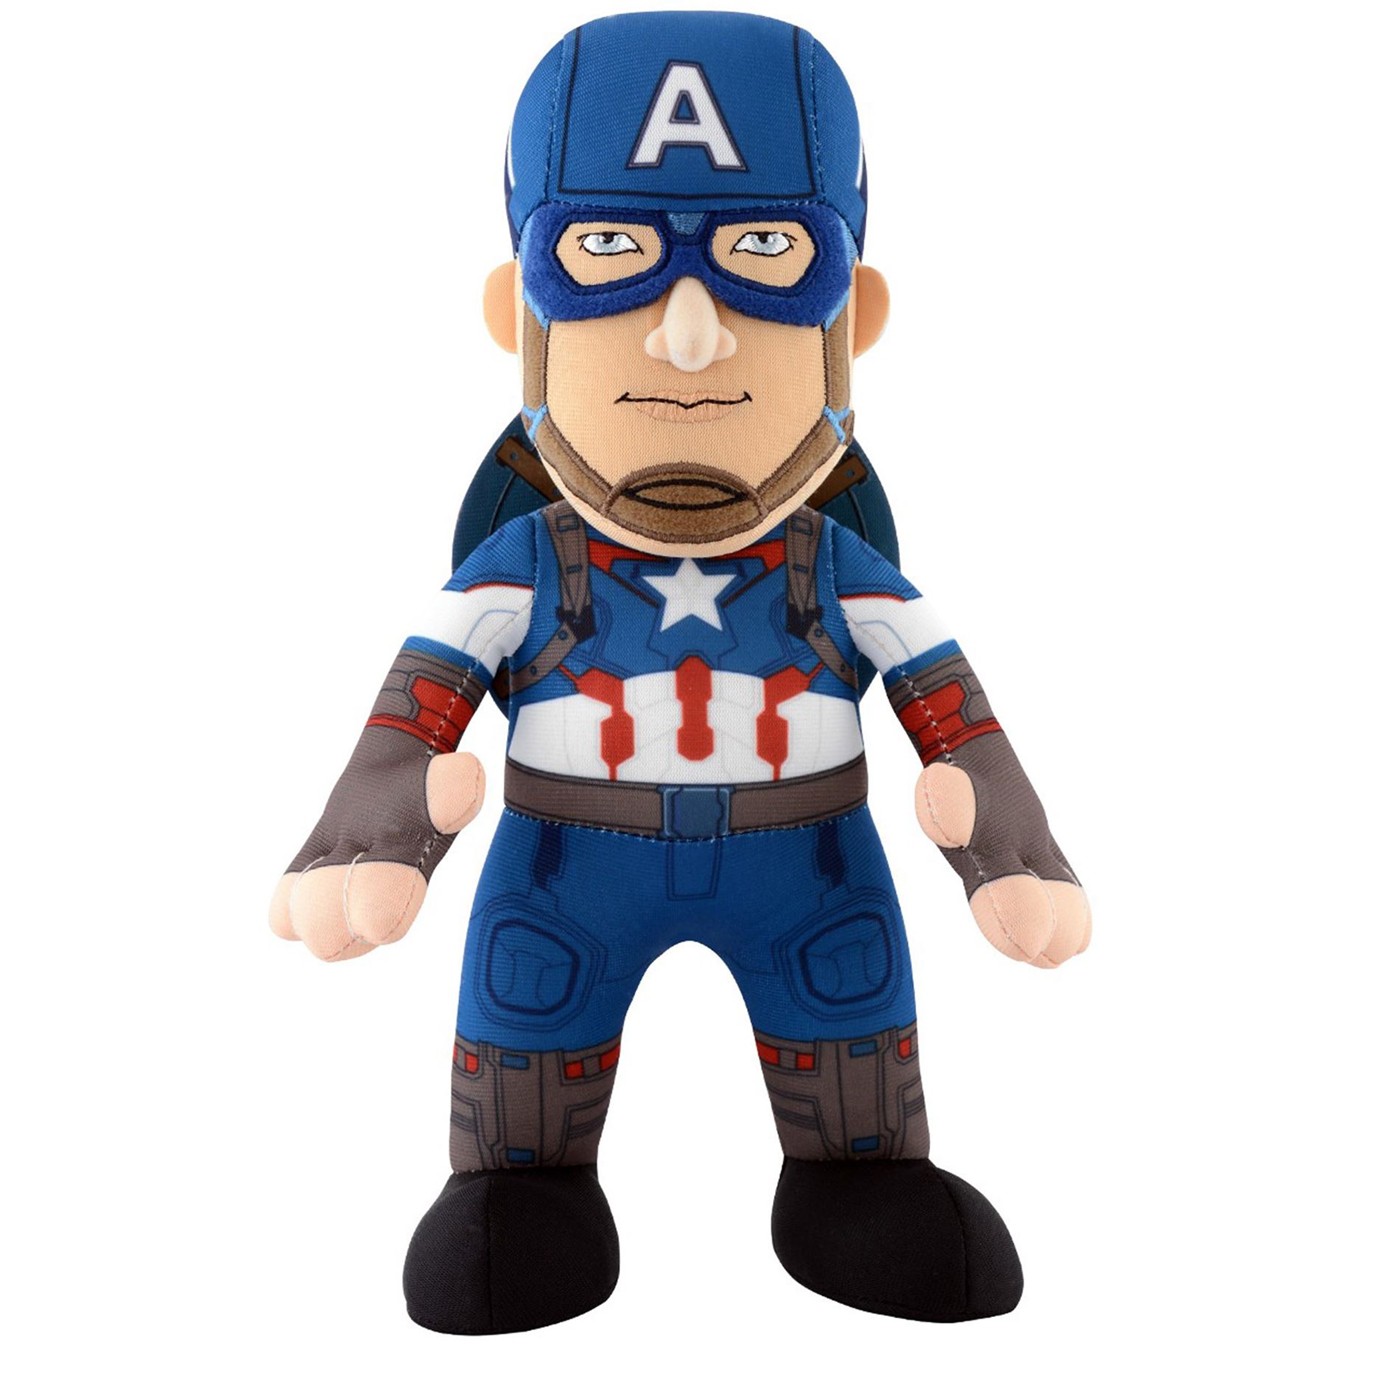 Captain America AOU Plush Bleacher Creature Figure